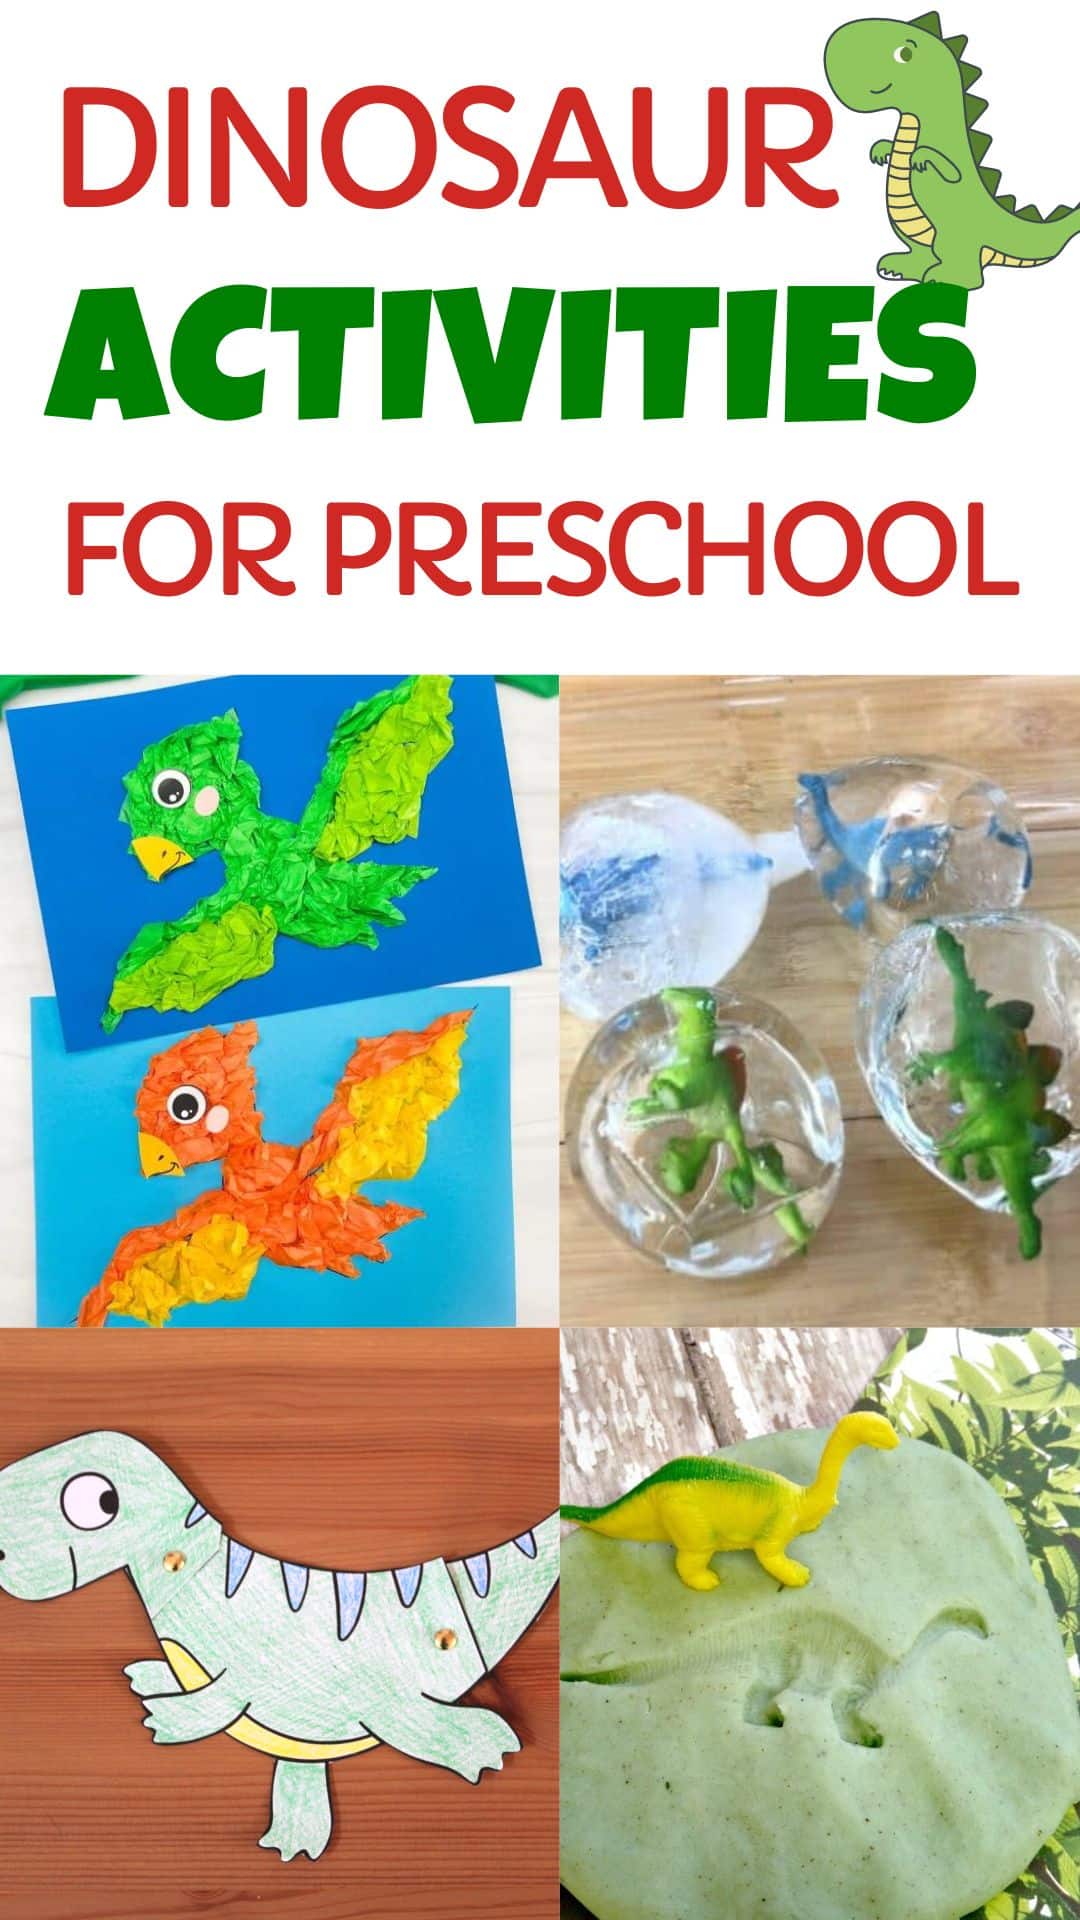 30 Easy Dinosaur Activities for Preschoolers - Simply Full of Delight